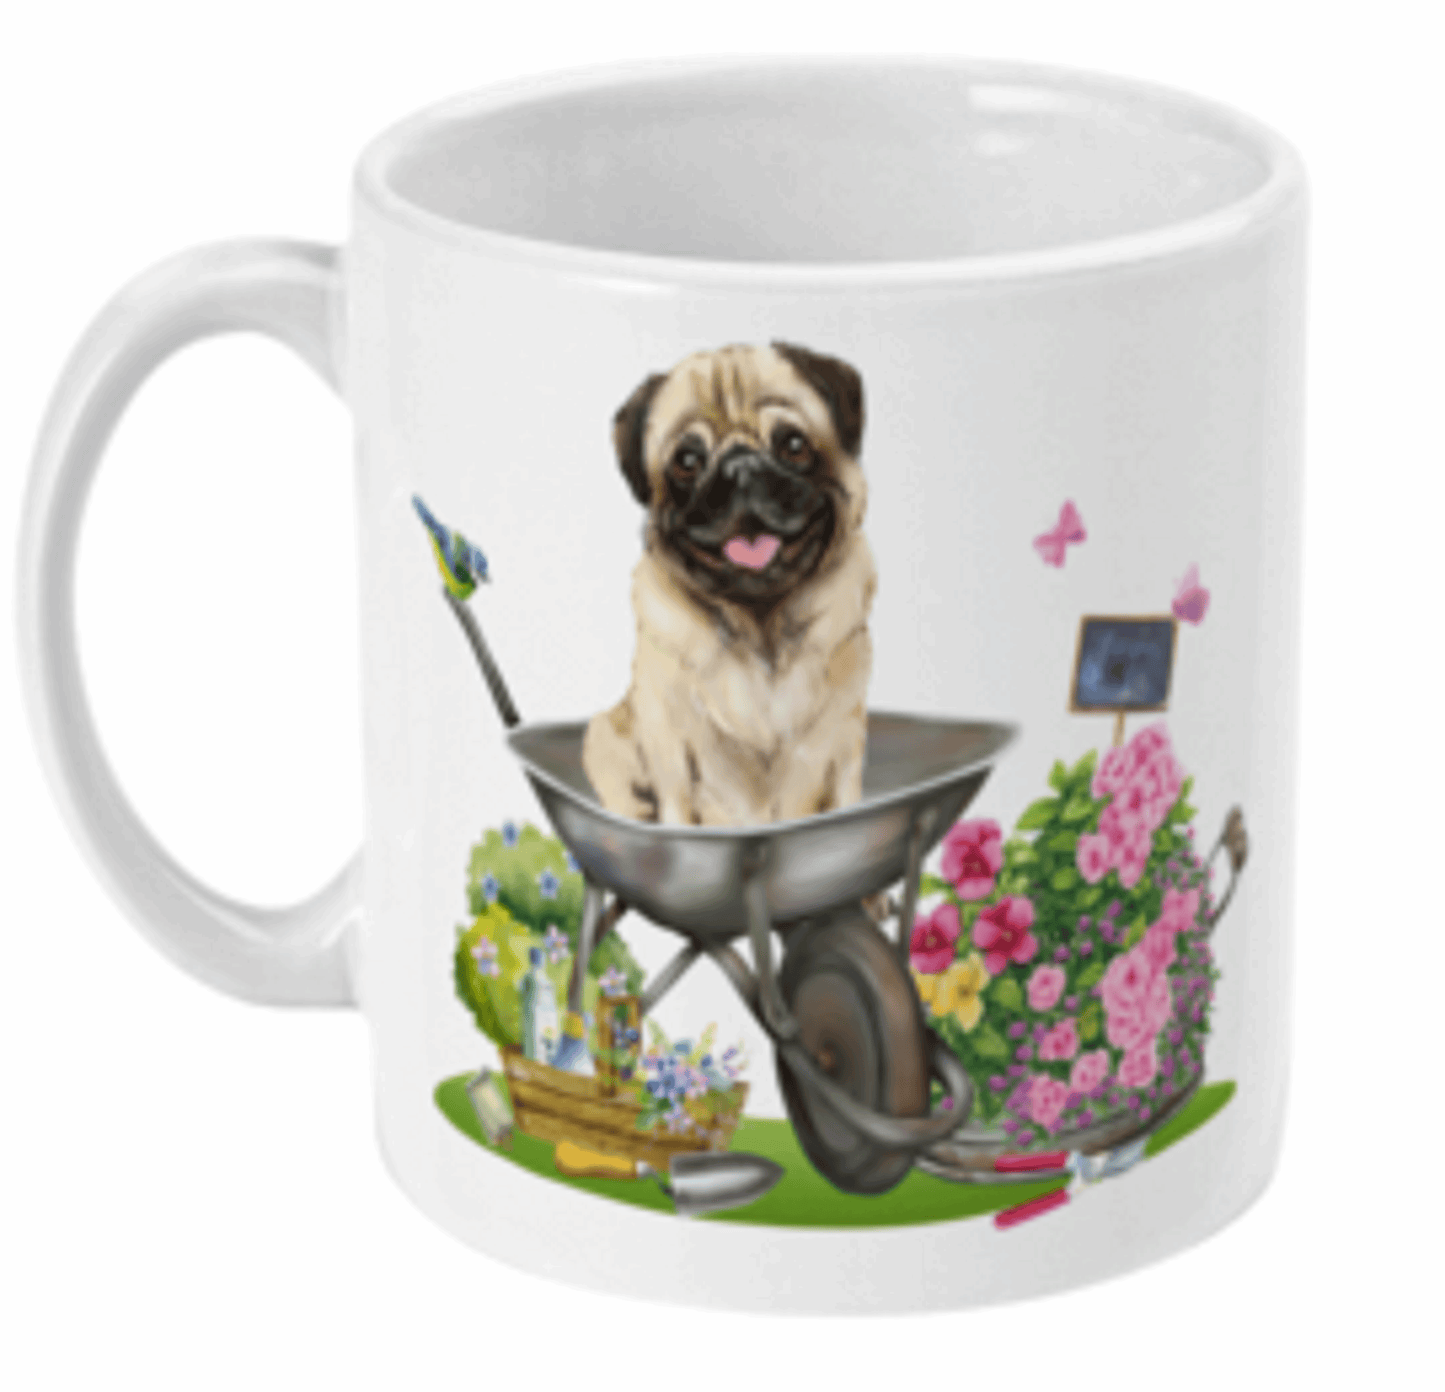  Gardening Pug Dog Coffee or Tea Mug by Free Spirit Accessories sold by Free Spirit Accessories